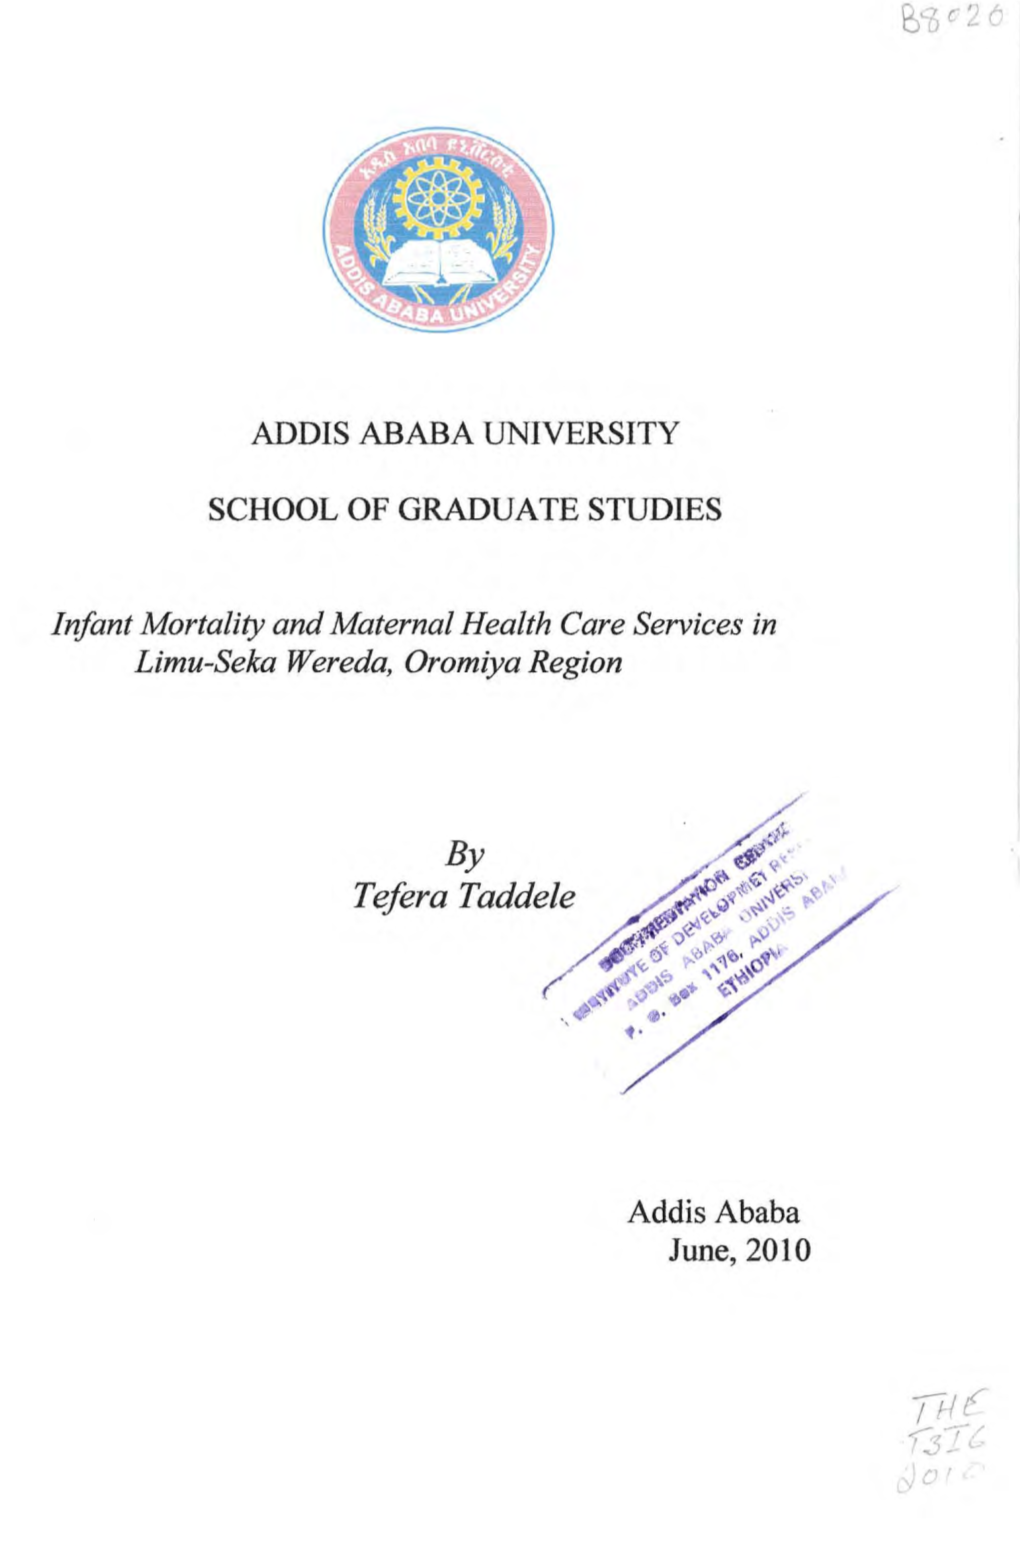 ADDIS ABABA UNIVERSITY SCHOOL of GRADUATE STUDIES Infant Mortality and Maternal Health Care Services in Limu-Seka Wereda, Oromiya Region